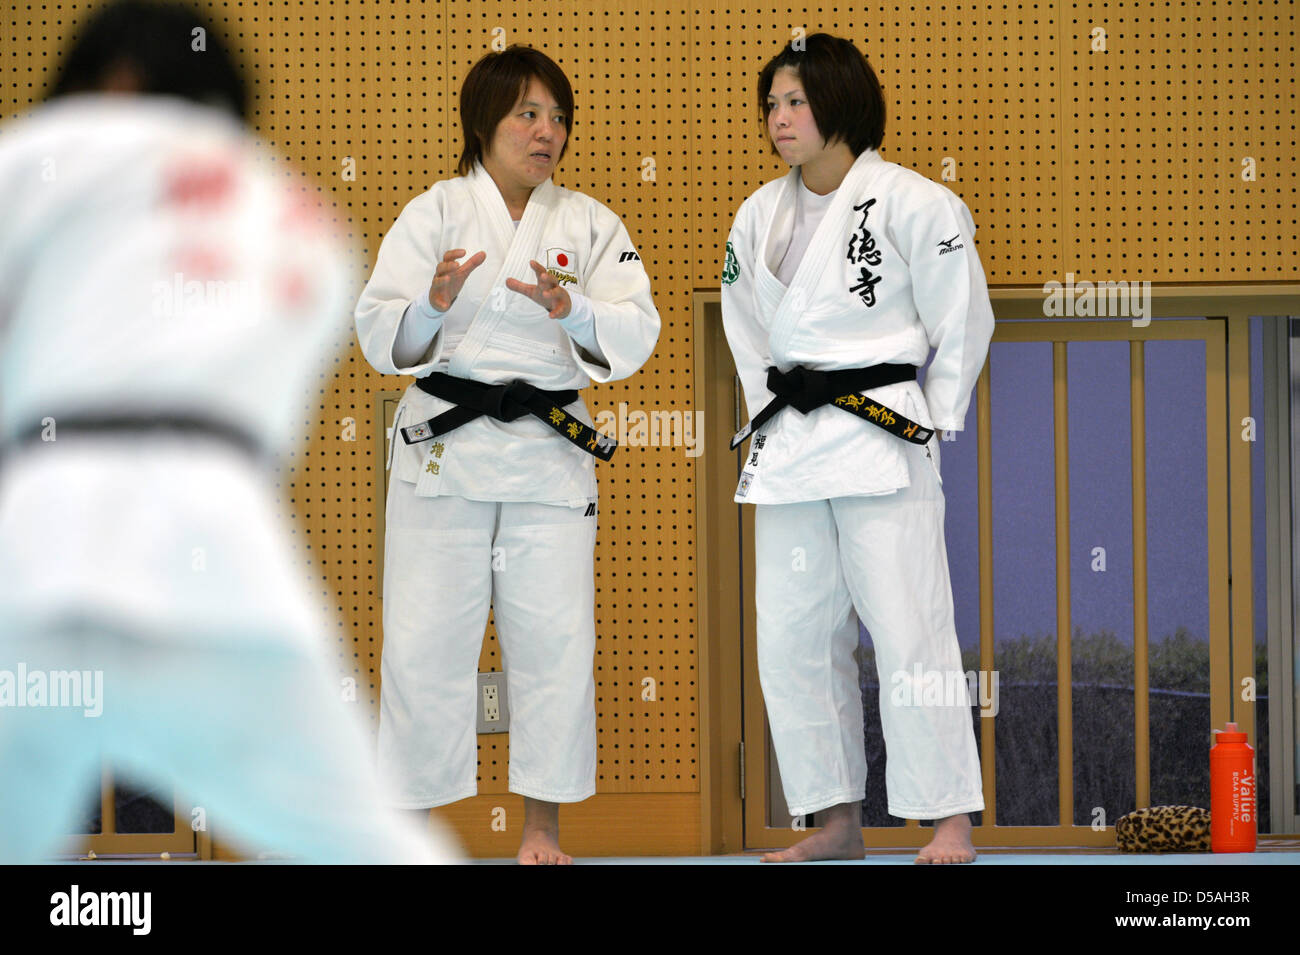 Tokyo, Japan. 27th March 2013. (L to R) Chiyori Masuchi (JPN), Tomoko Fukimi (JPN), MARCH 27, 2013 - Judo : Japan women's team training session at Ajinomoto National training center, Tokyo, Japan. (Photo by Jun Tsukida/AFLO SPORT/Alamy Live News) Stock Photo